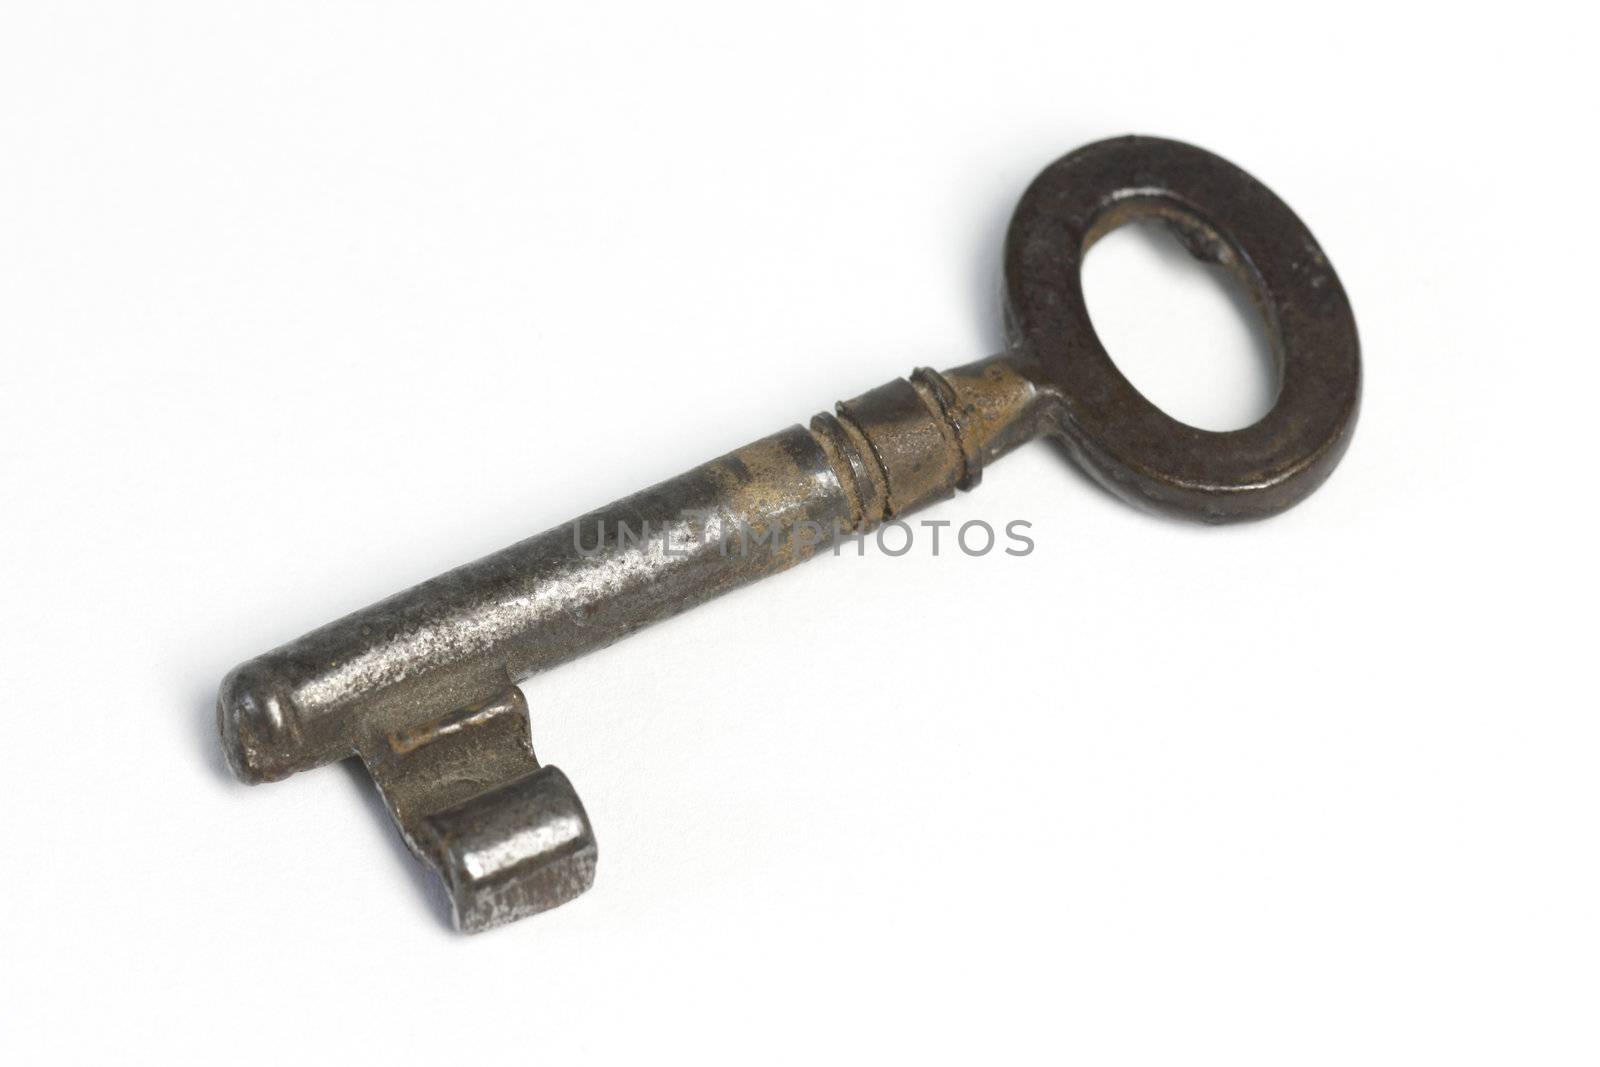 Old key by Teamarbeit